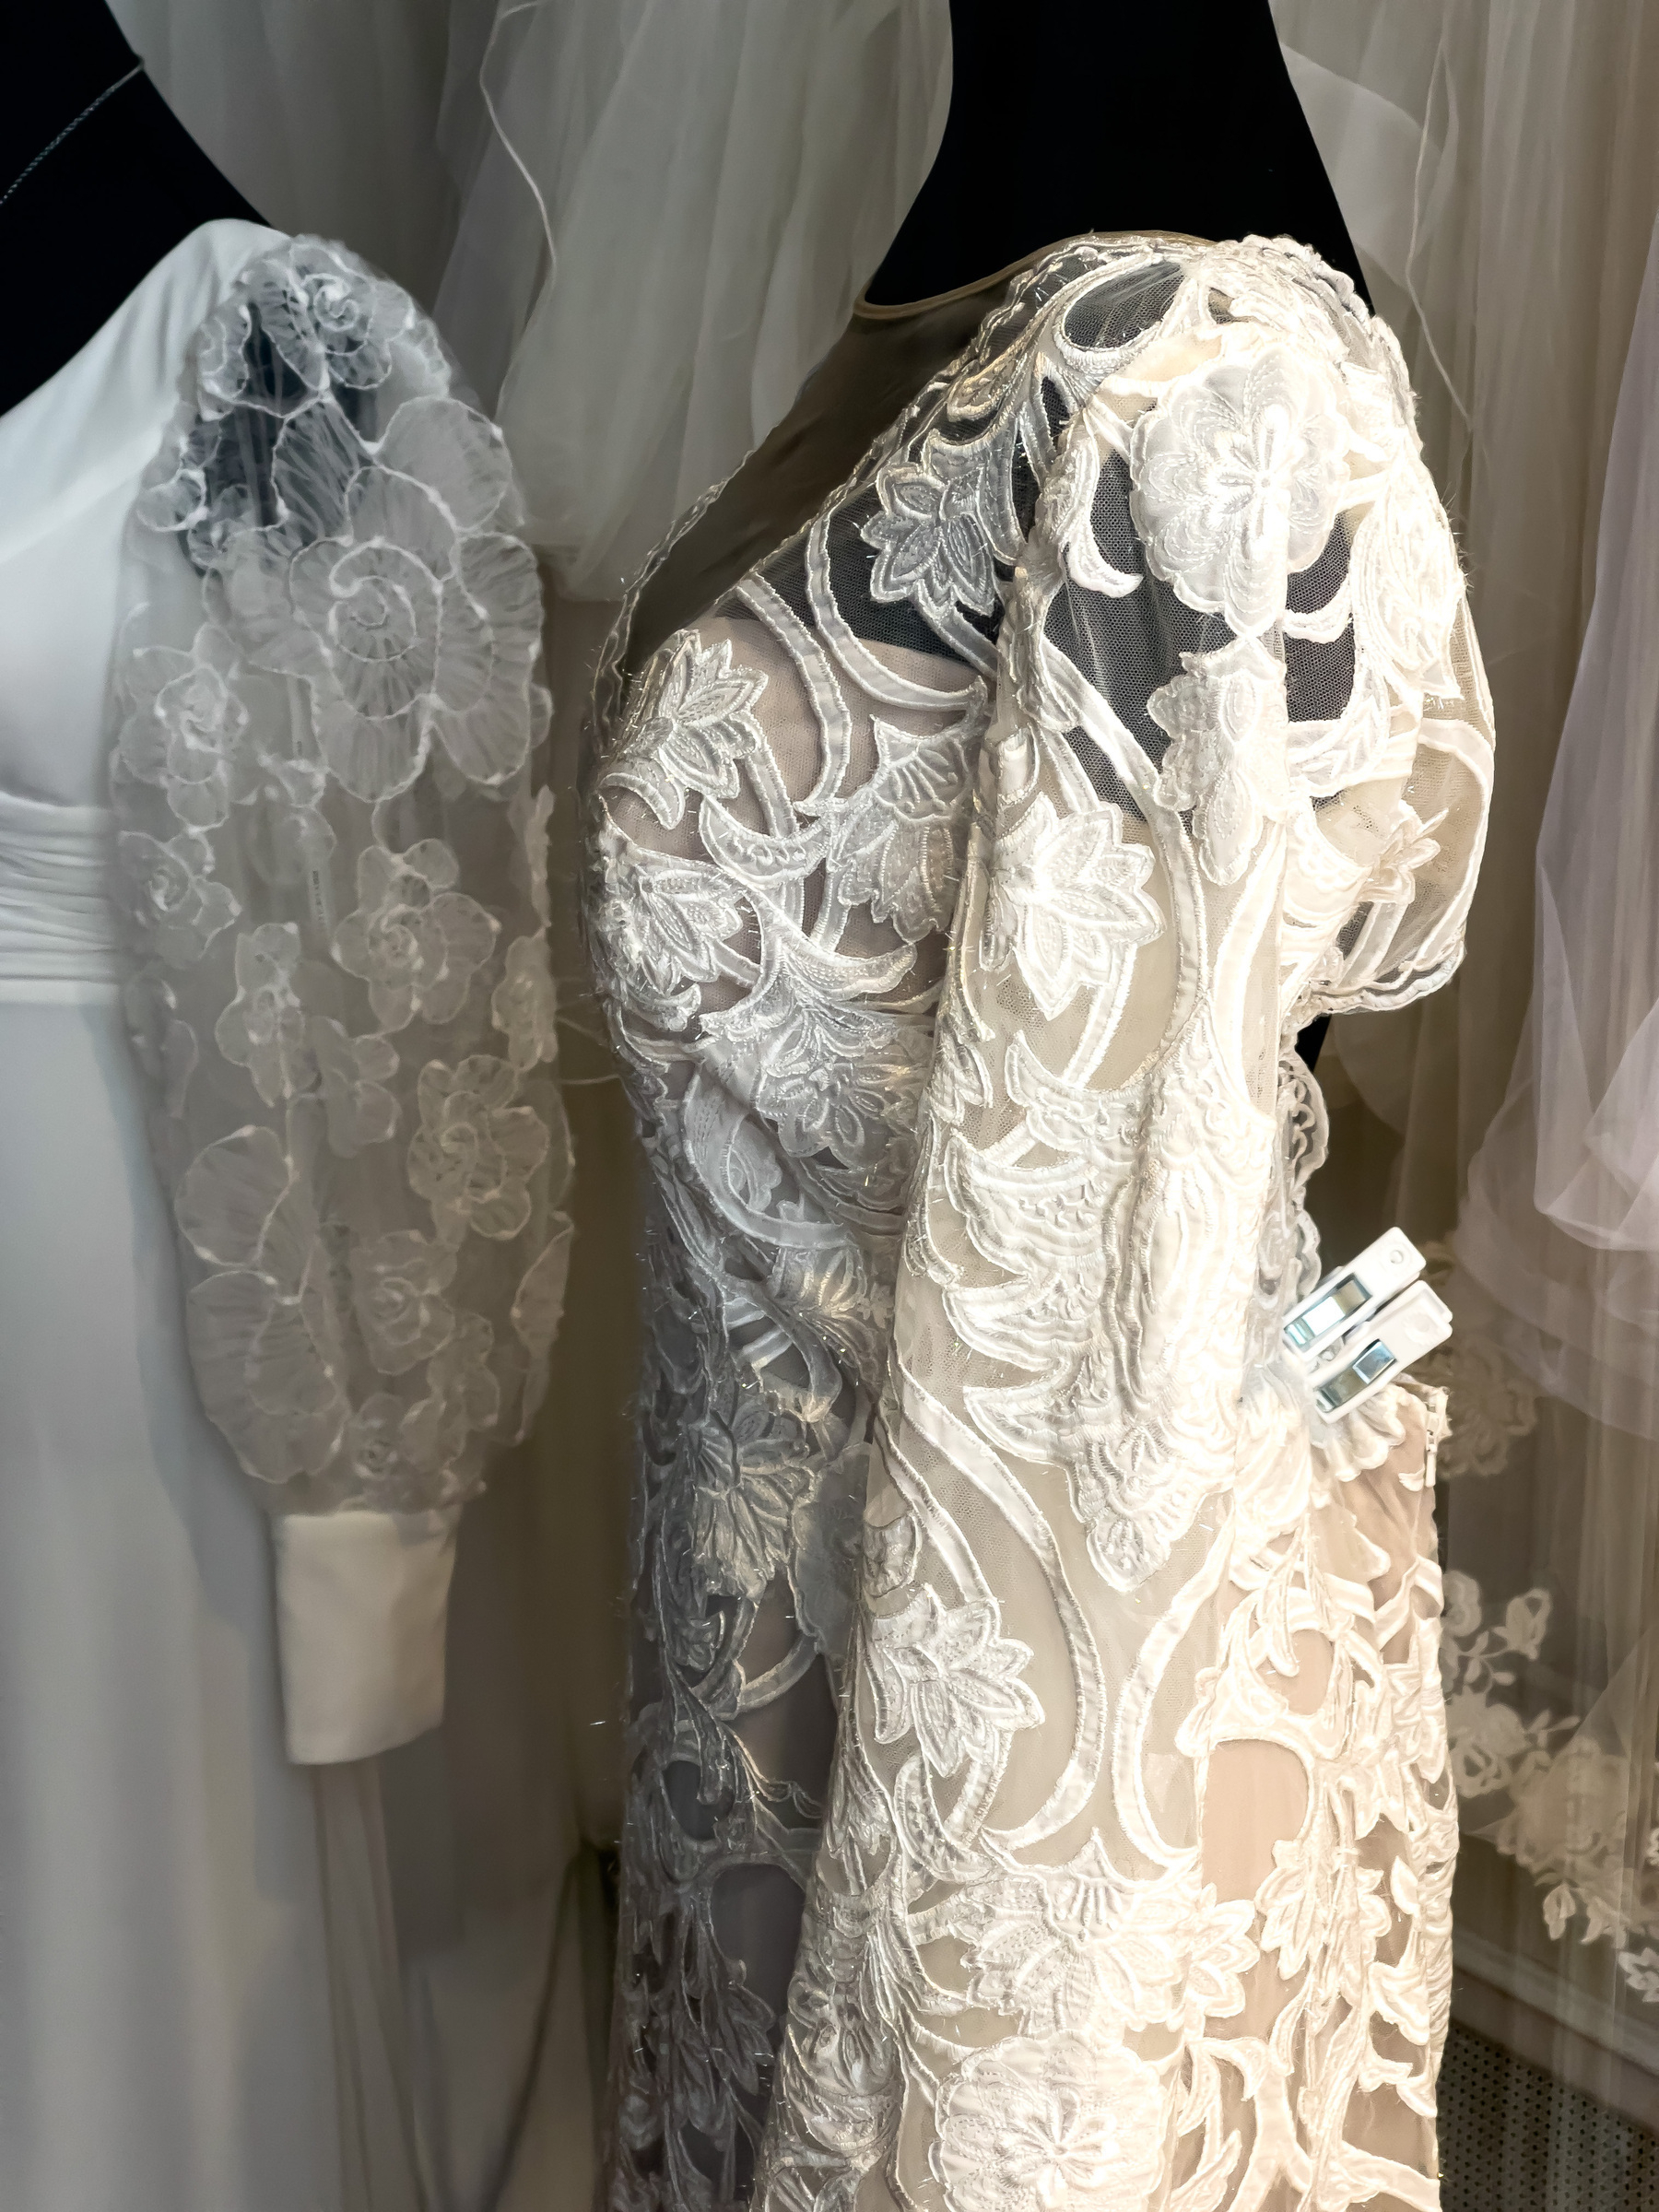 Lace wedding dresses in a bridal shop.